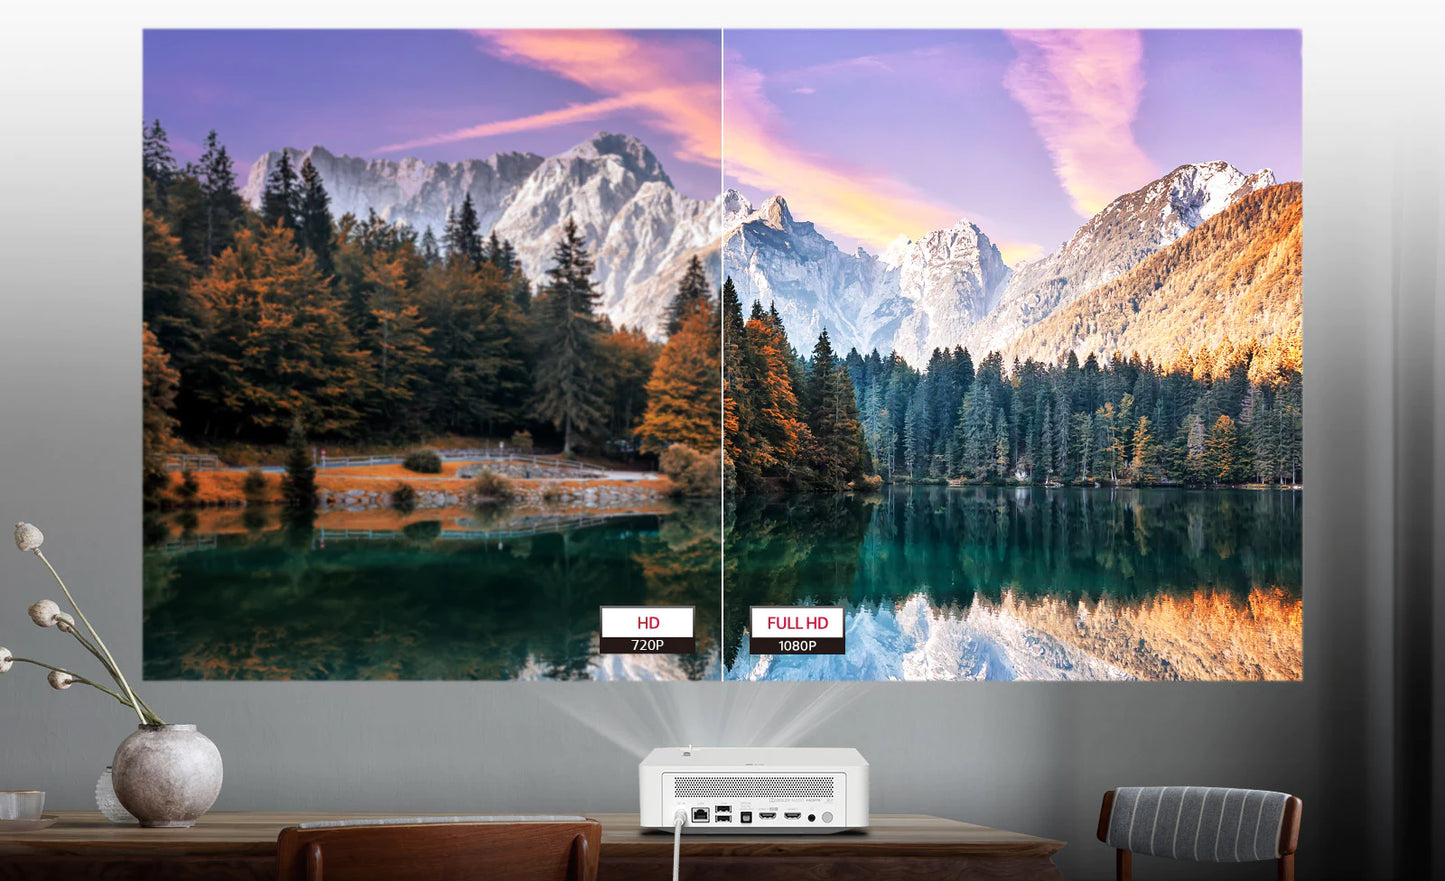 LG Proiettore CineBeam LED Full HD 1000 Lumens Smart Contrasto 150,000:1